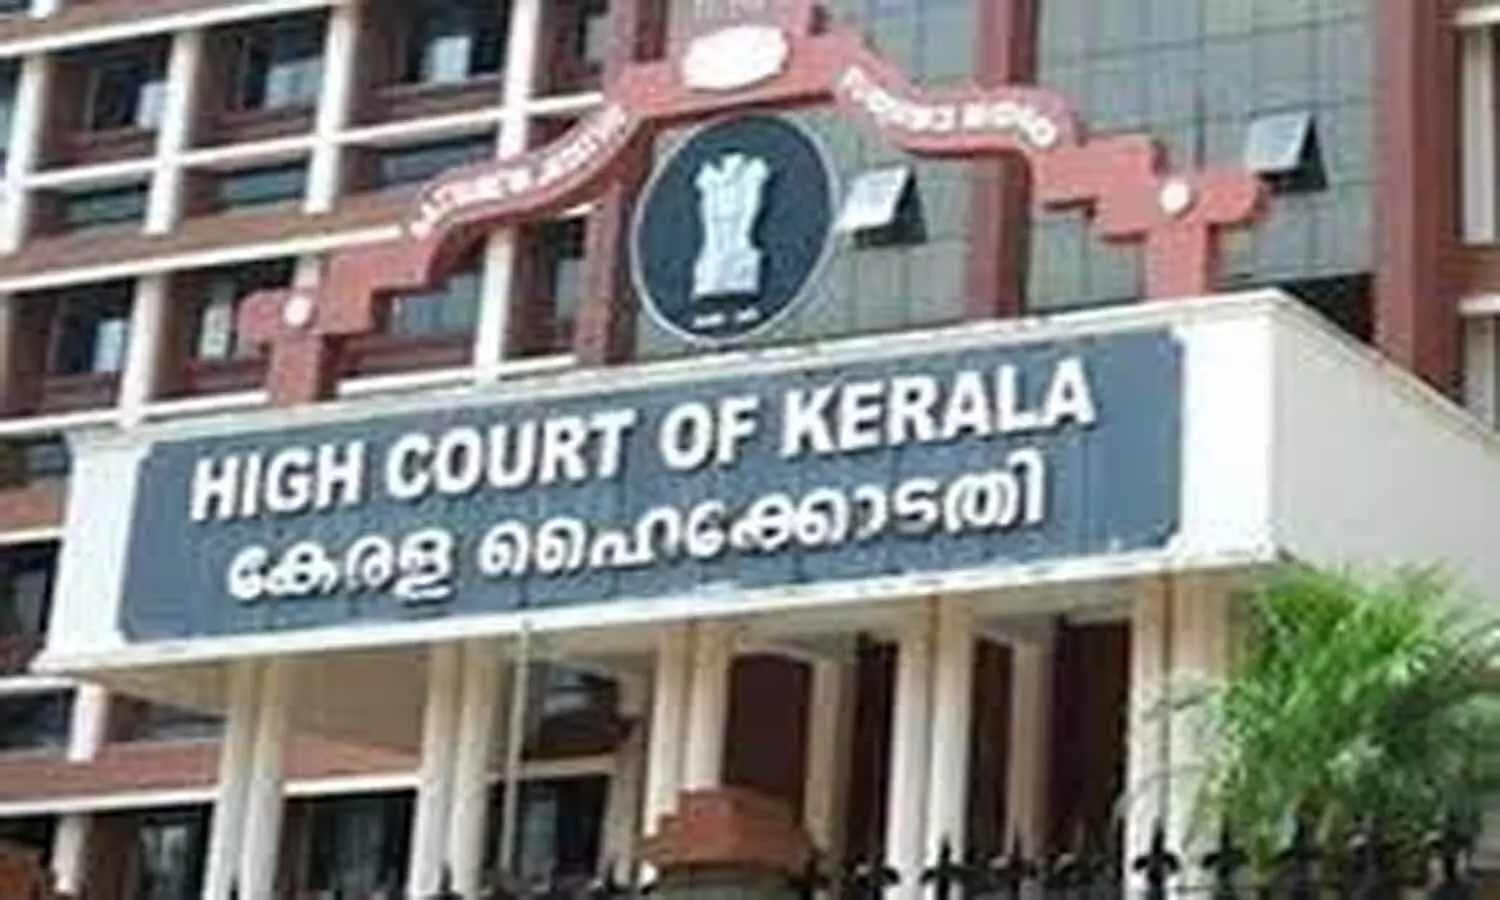 Rs 30 for paracetamol, Rs 1,300 per bowl Kanji: Kerala HC orders Govt to enforce capped COVID treatment rates at private hospitals ASAP